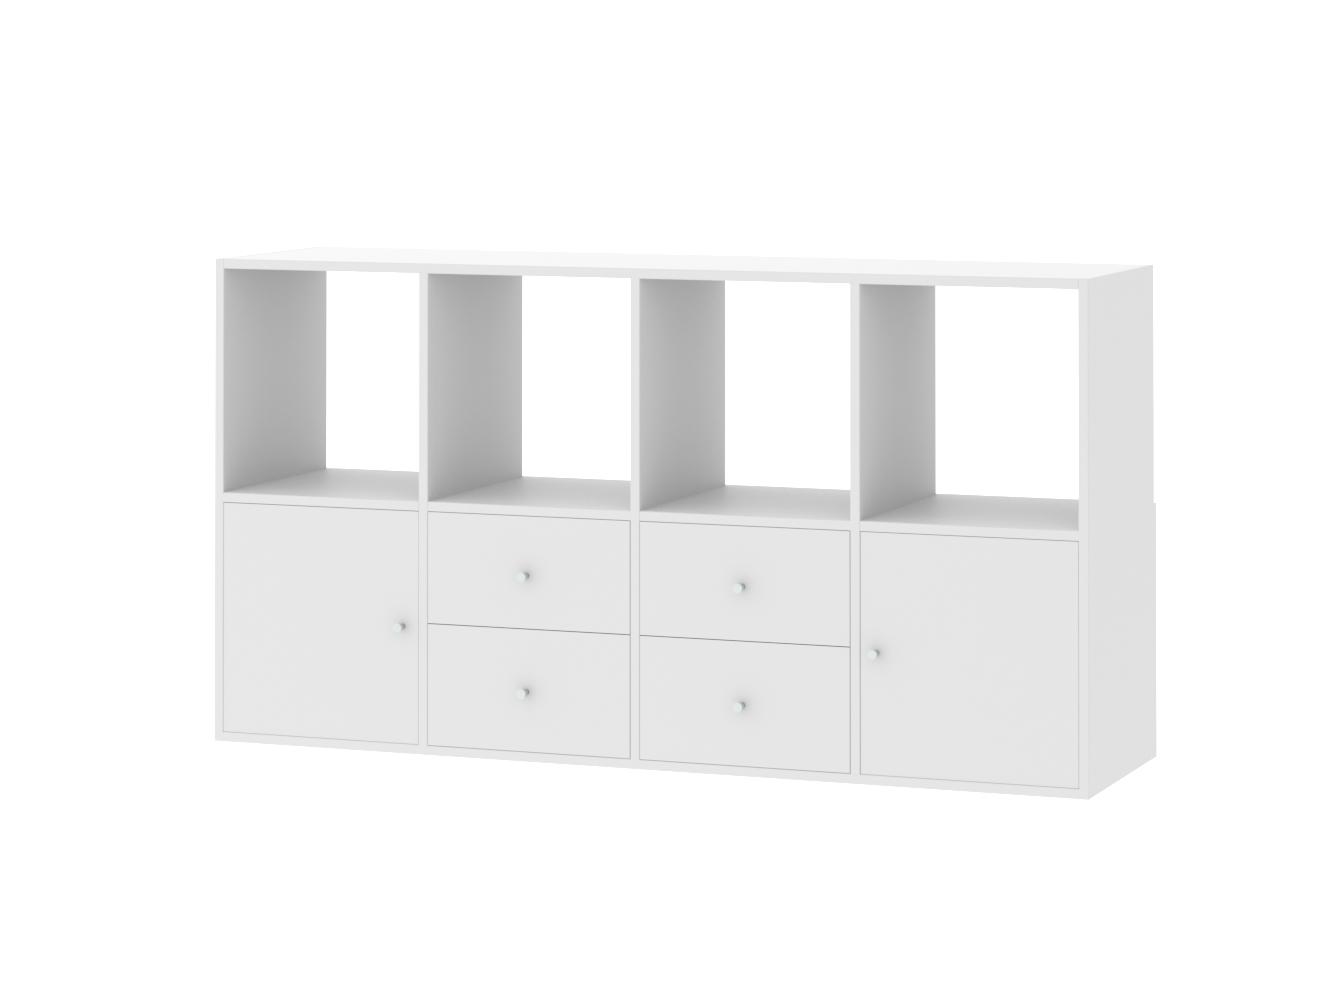 Изображение товара Стеллаж Билли 122 white ИКЕА (IKEA), 147x39x77 см на сайте adeta.ru